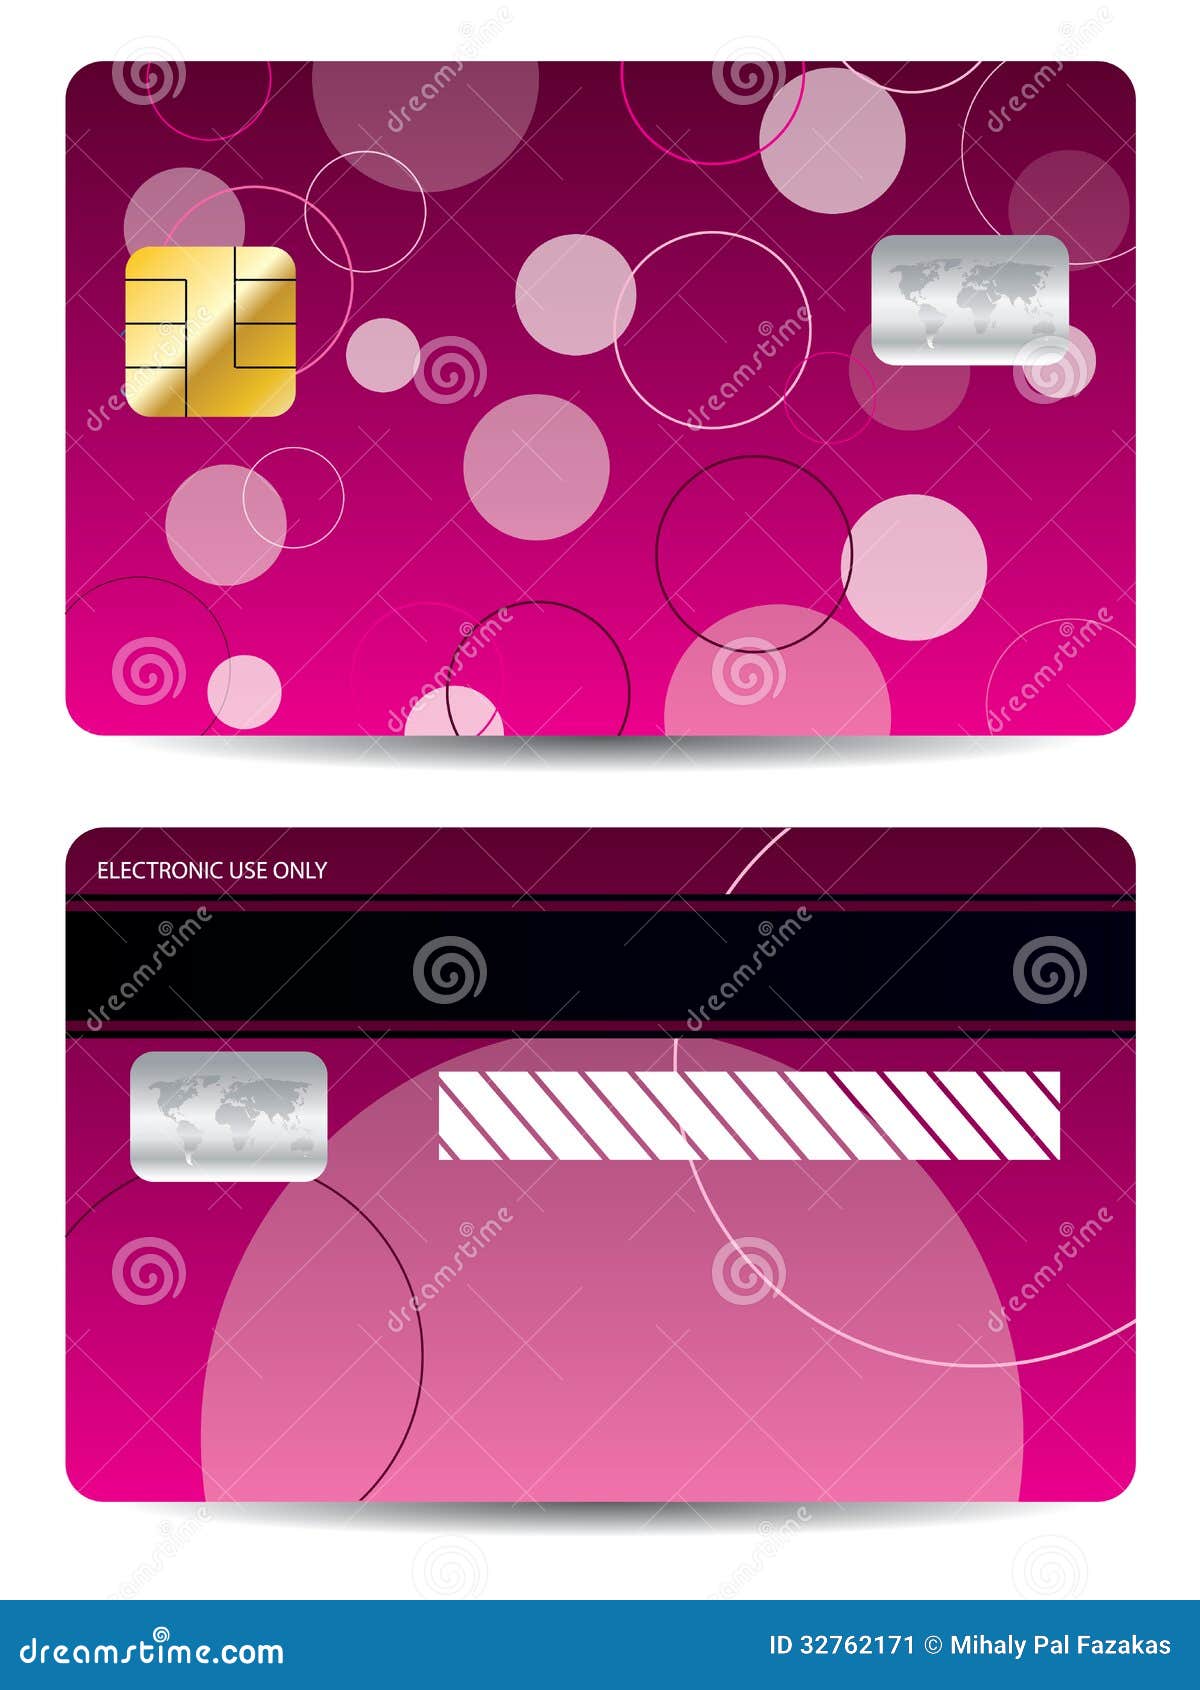 Pink credit card stock vector. Illustration of debt, bank - 32762171